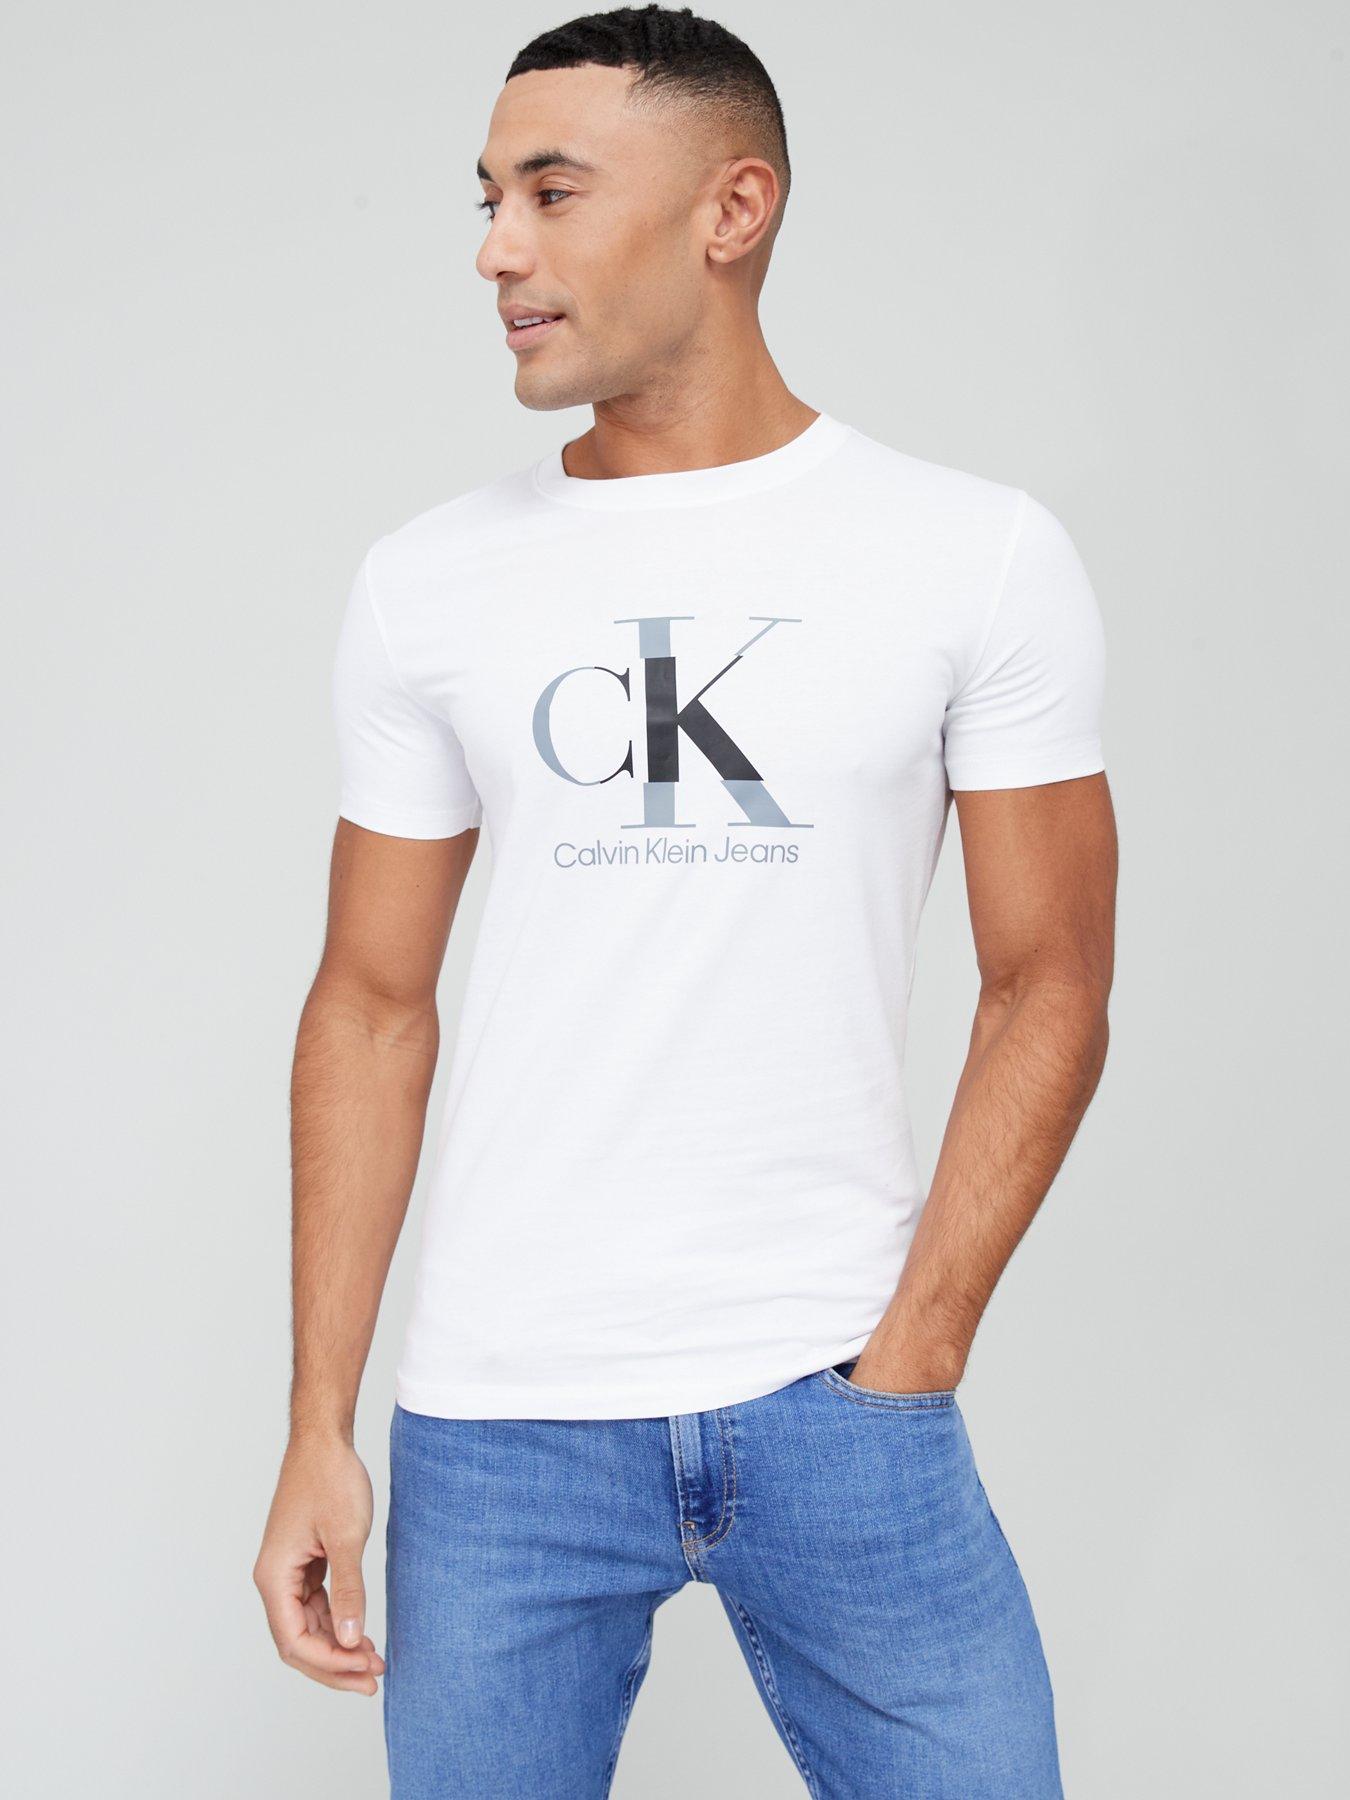 Calvin Klein Jeans Disrupted Monologo T-shirt - White 